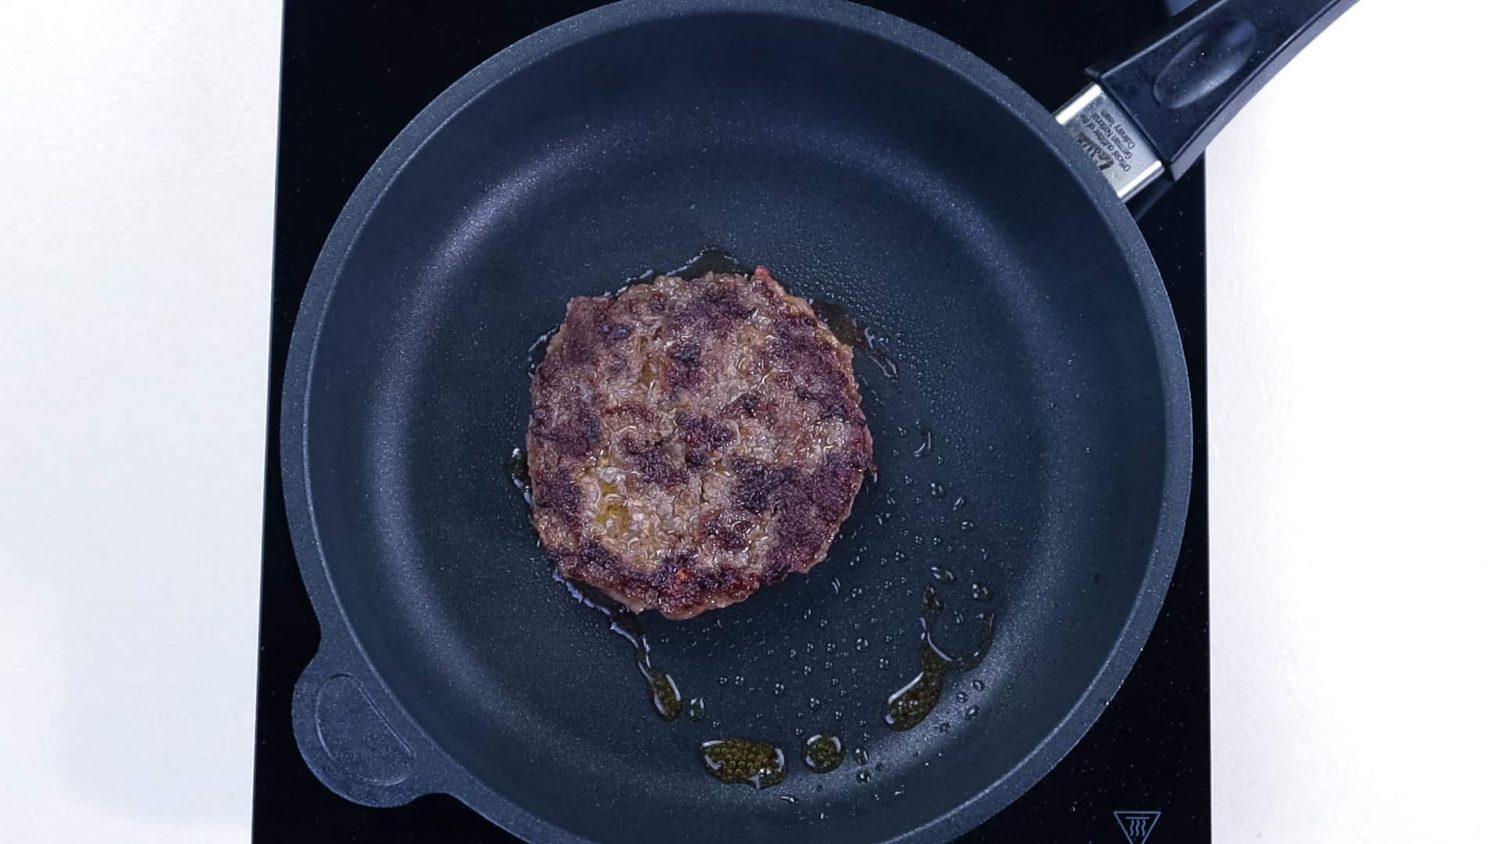 Travis scott burger recipe process photo 4